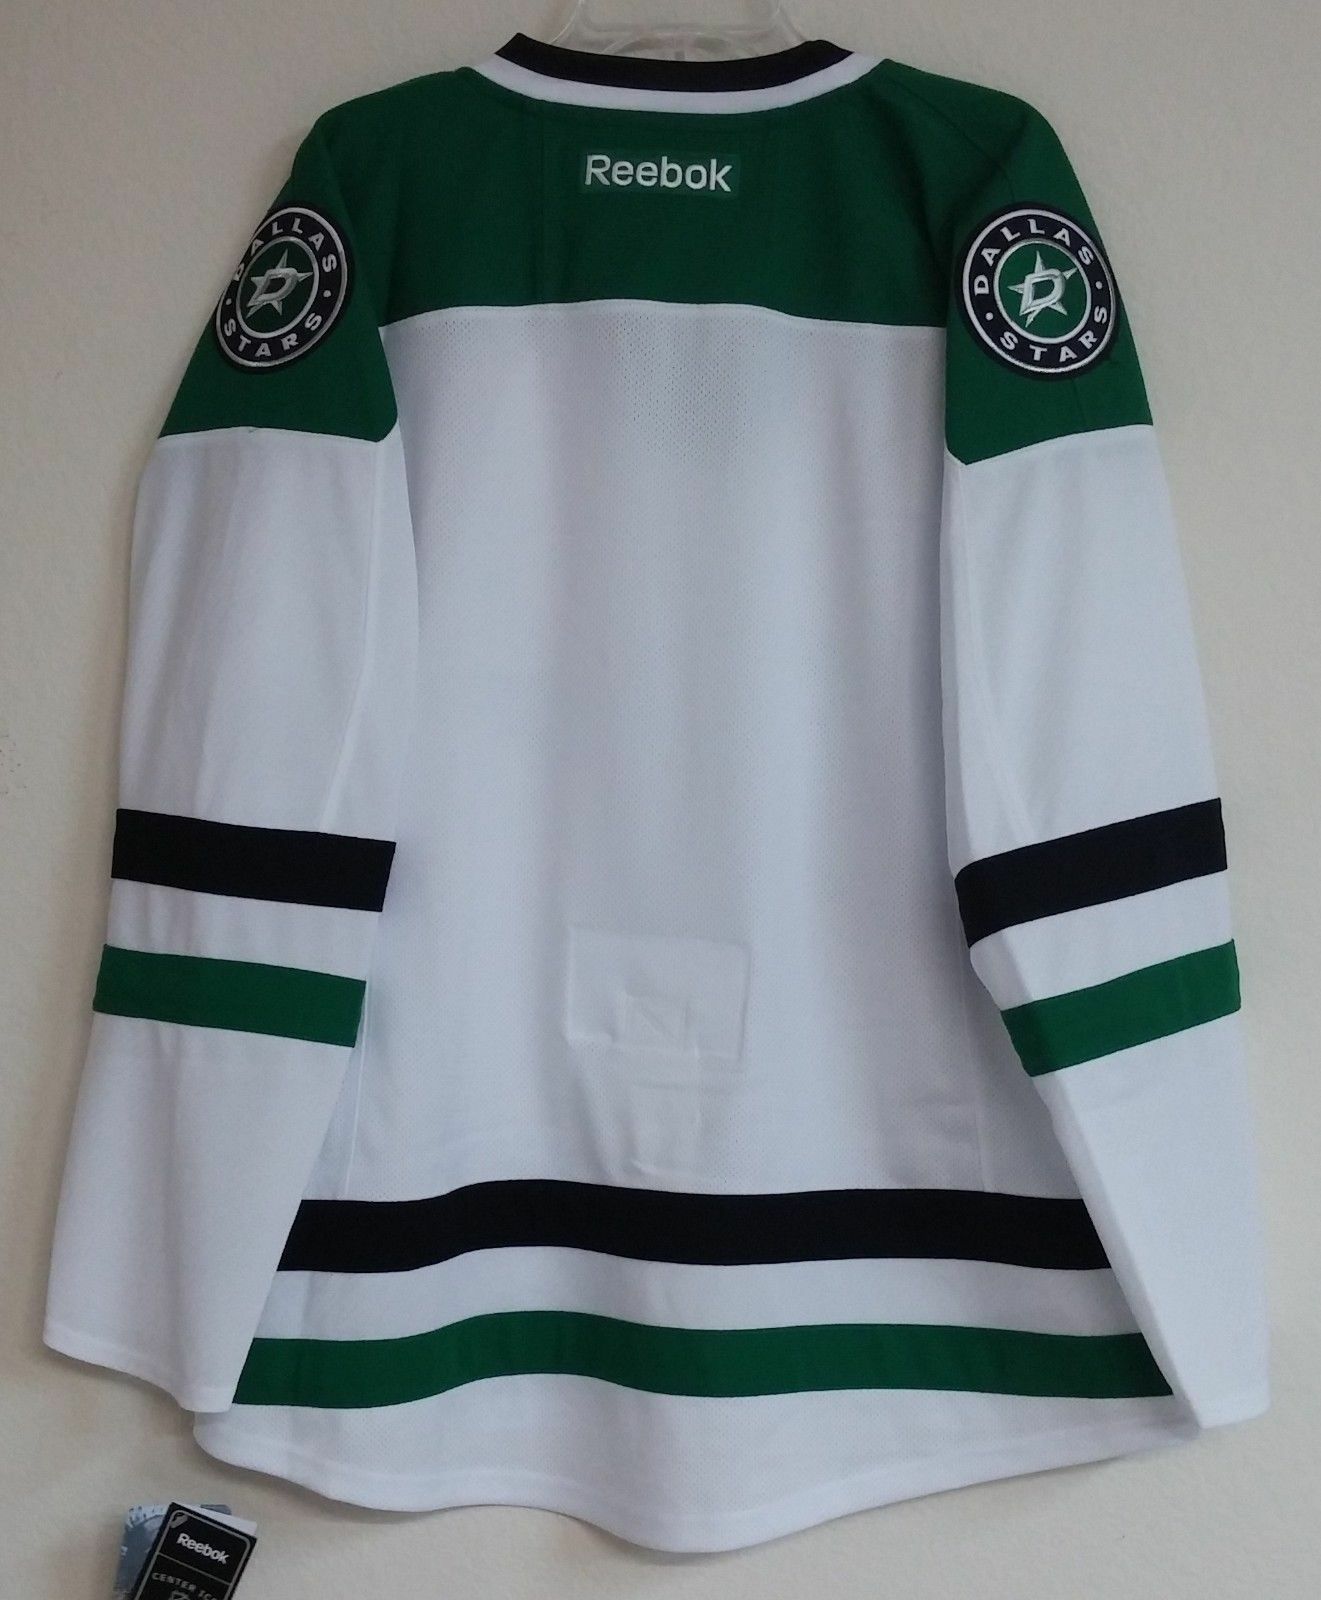 DALLAS STARS reebok NHL authentic EDGE 1.0 hockey jersey away-white size 50 NEW Image 2